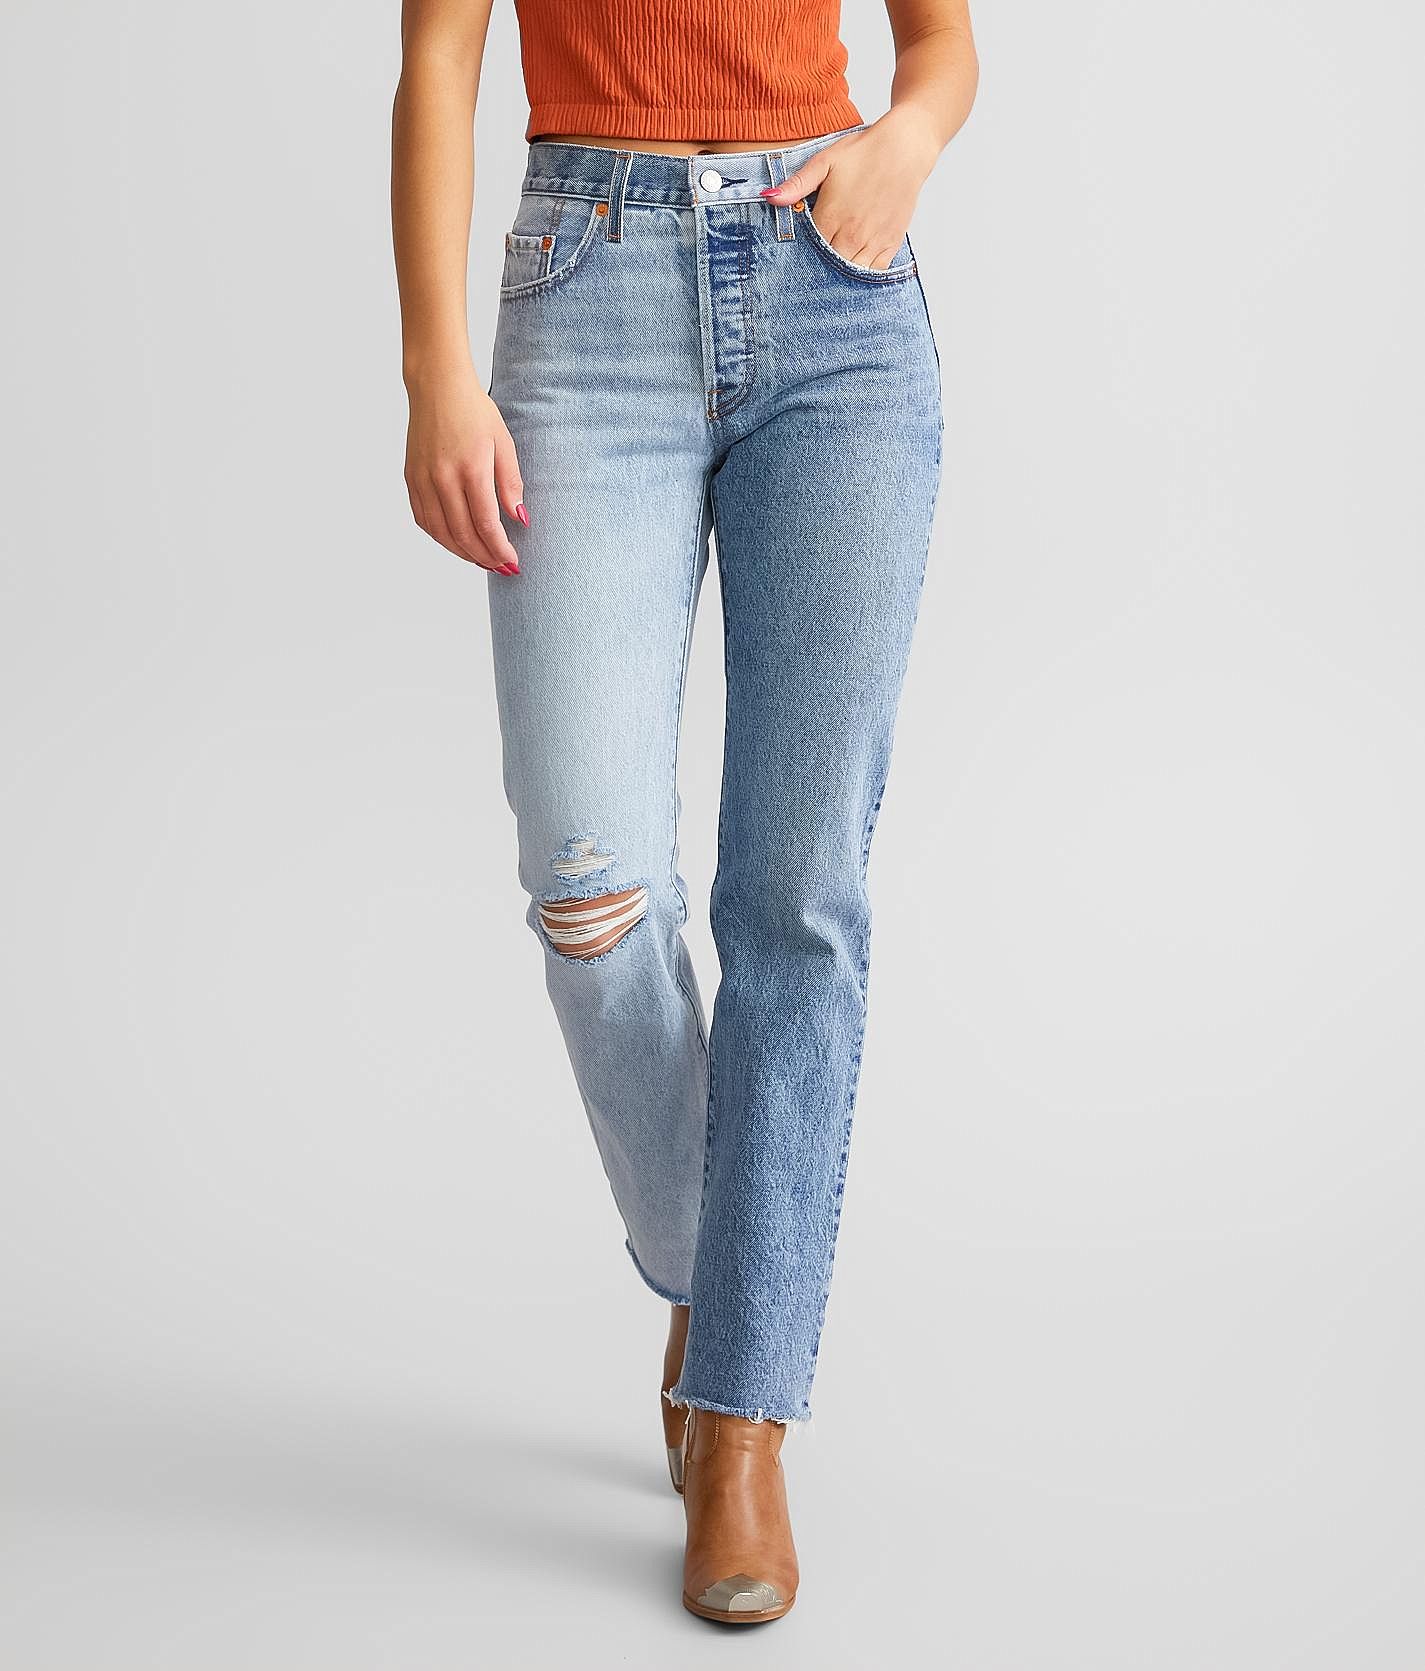 Levi's® 501® Original Jean - Women's Jeans in Two Tone Indigo | Buckle